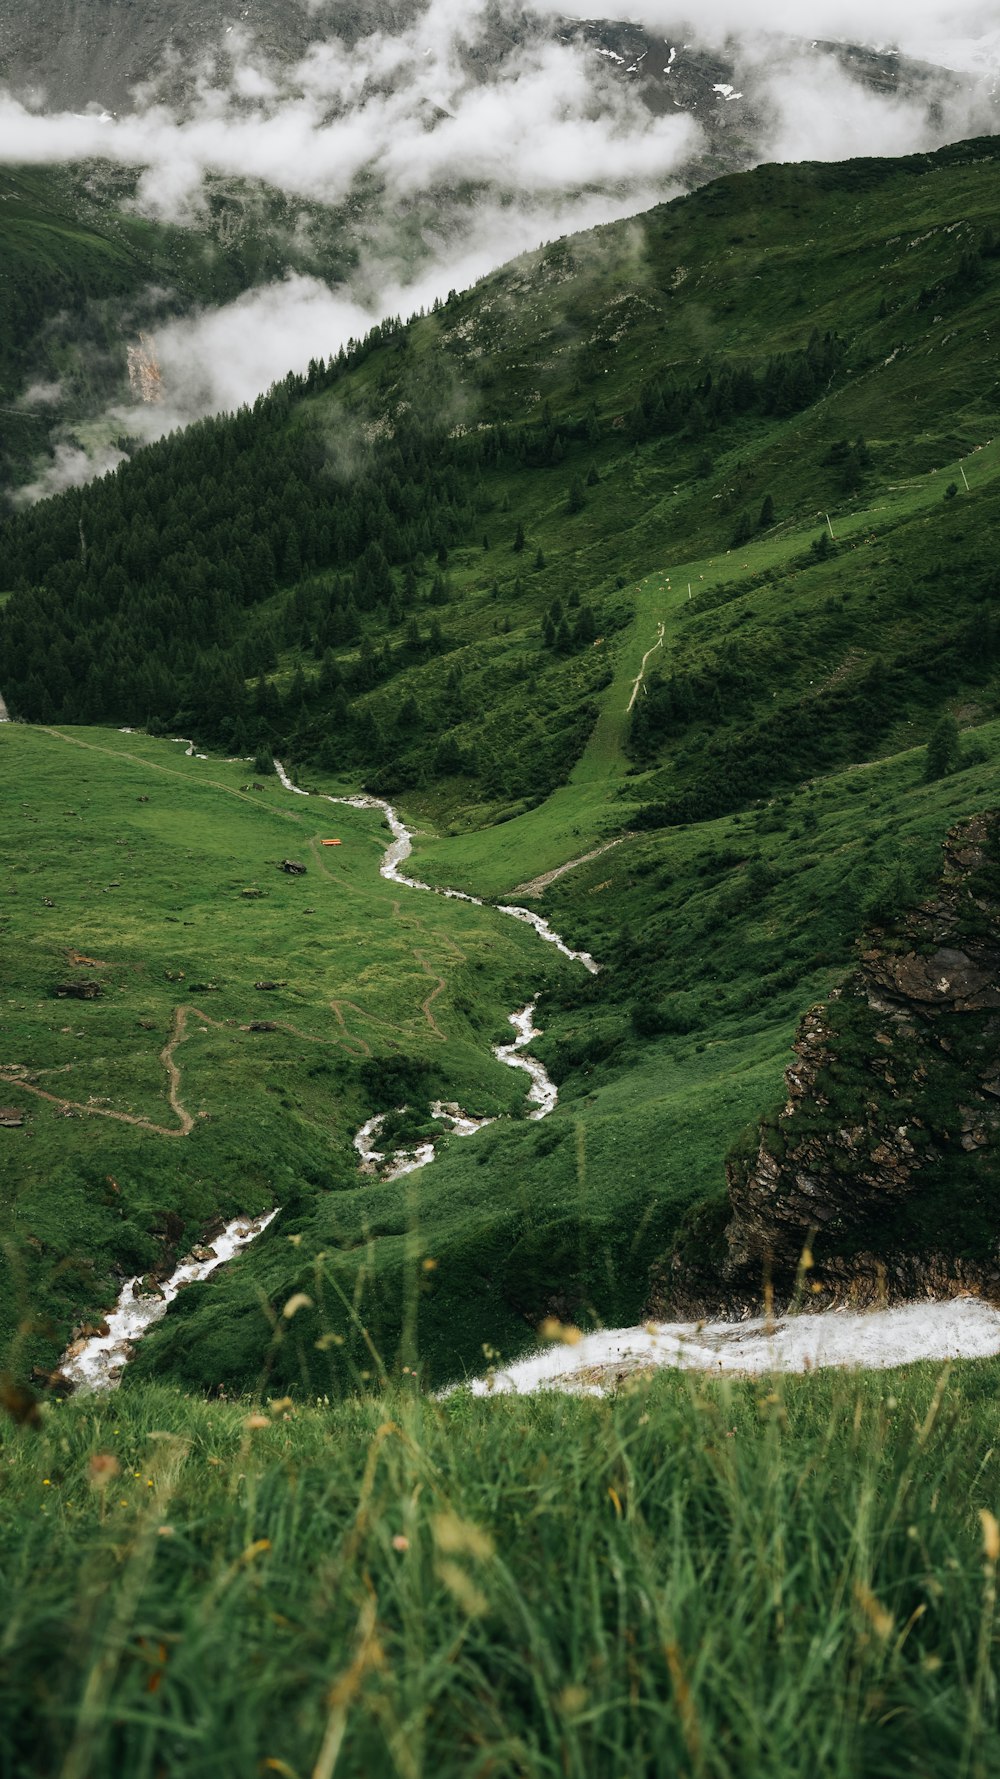 a stream running through a lush green valley